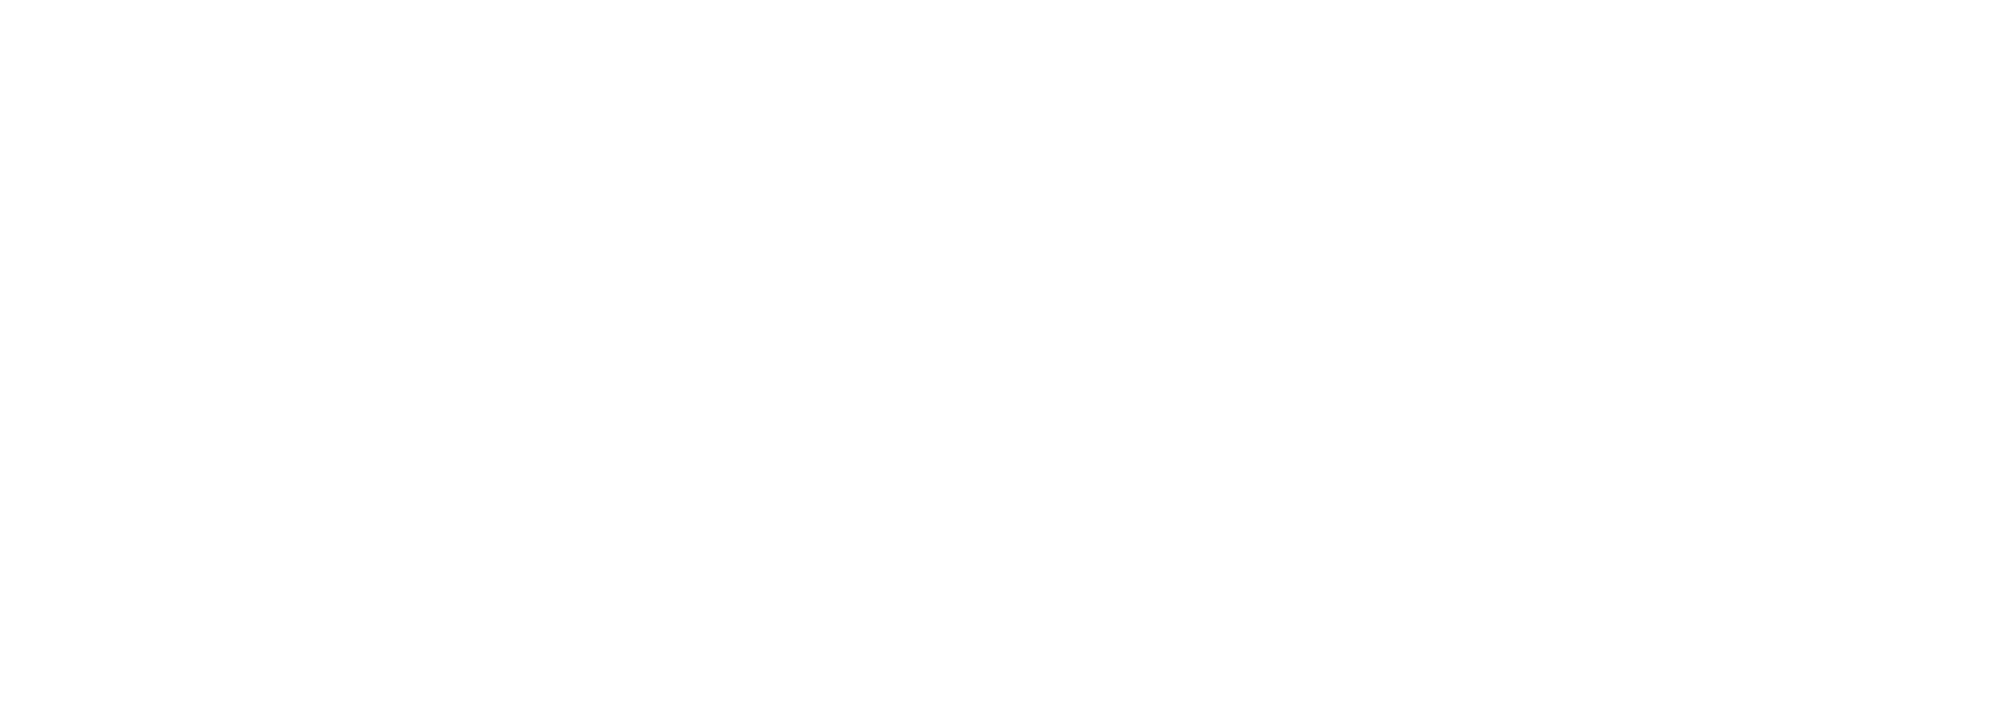 Wall Designing